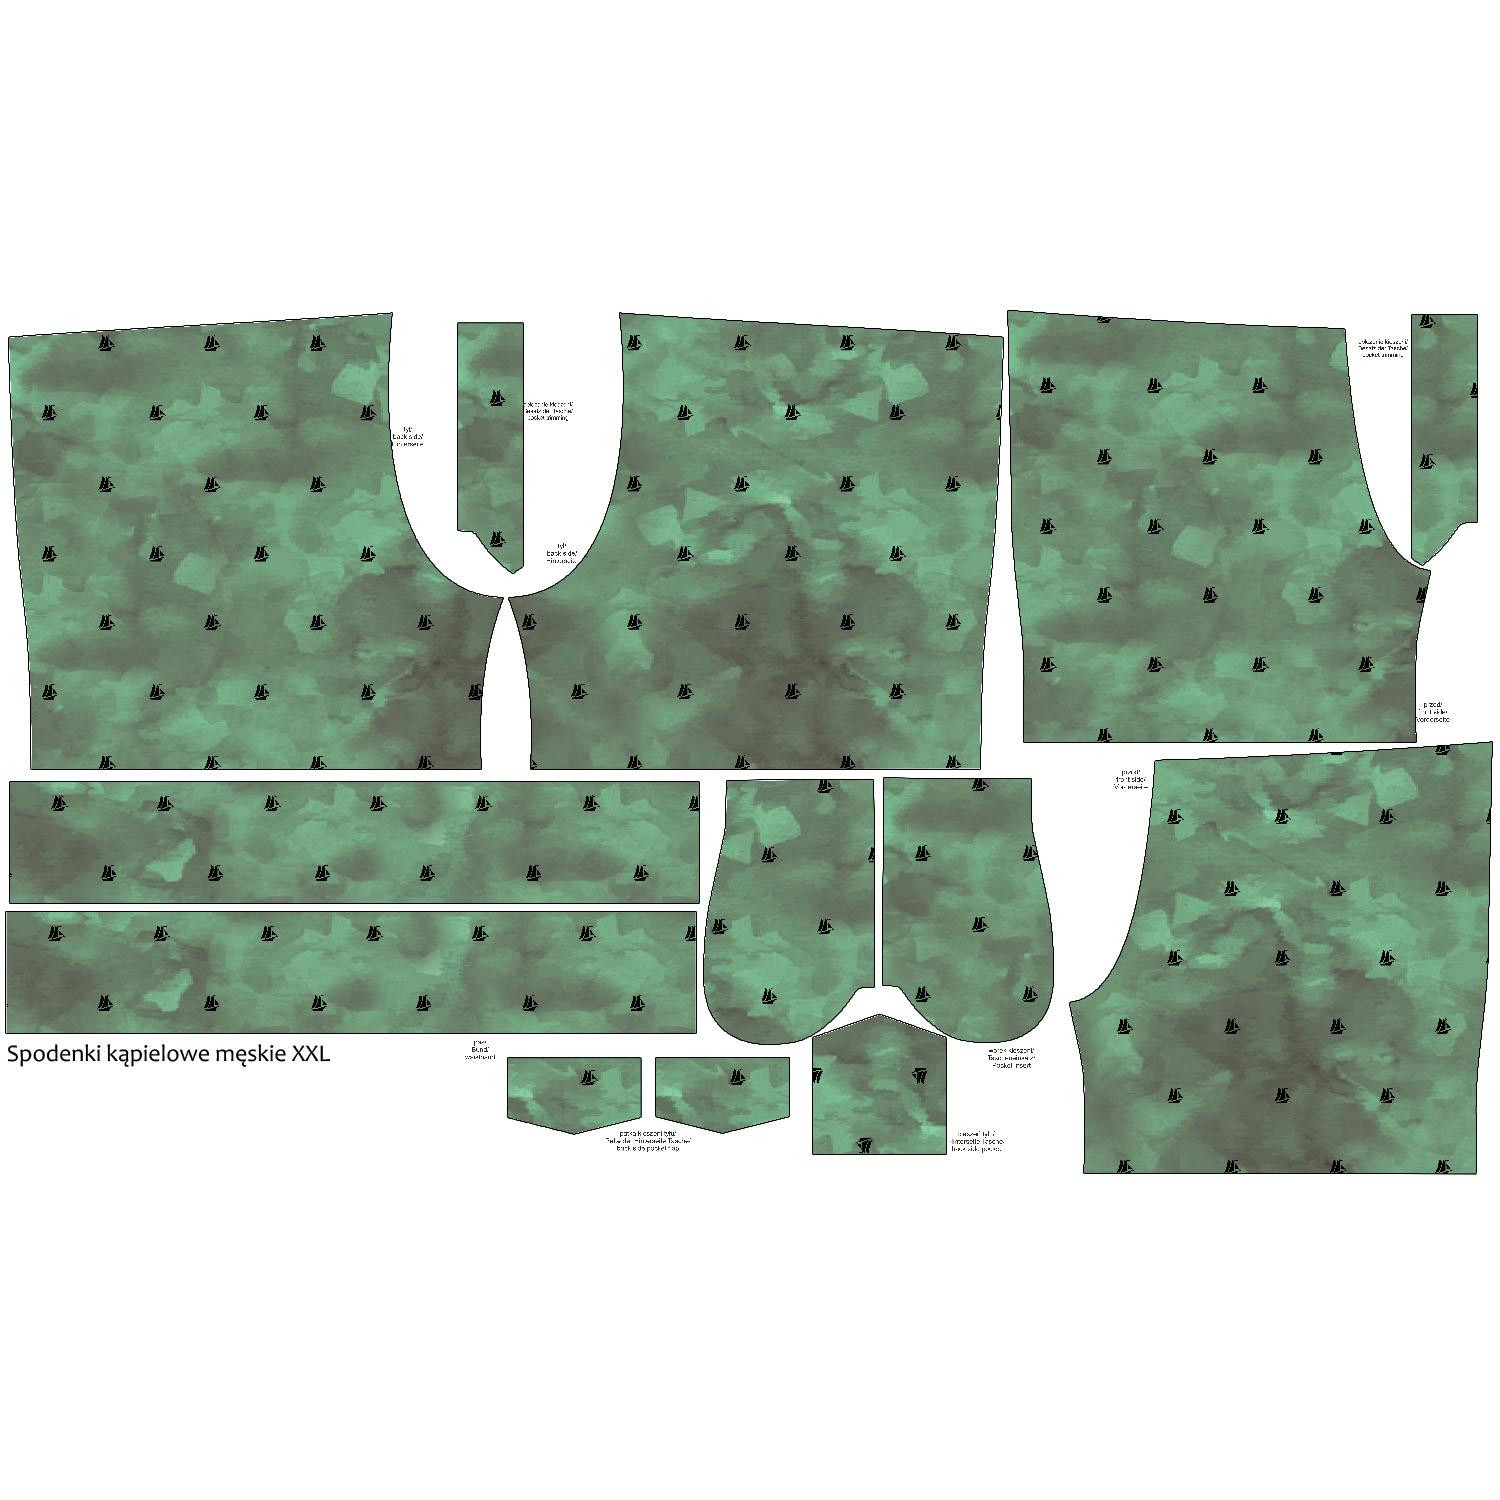 Men's swim trunks -  SAILING SHIPS (minimal) / CAMOUFLAGE pat. 2 (olive) - sewing set